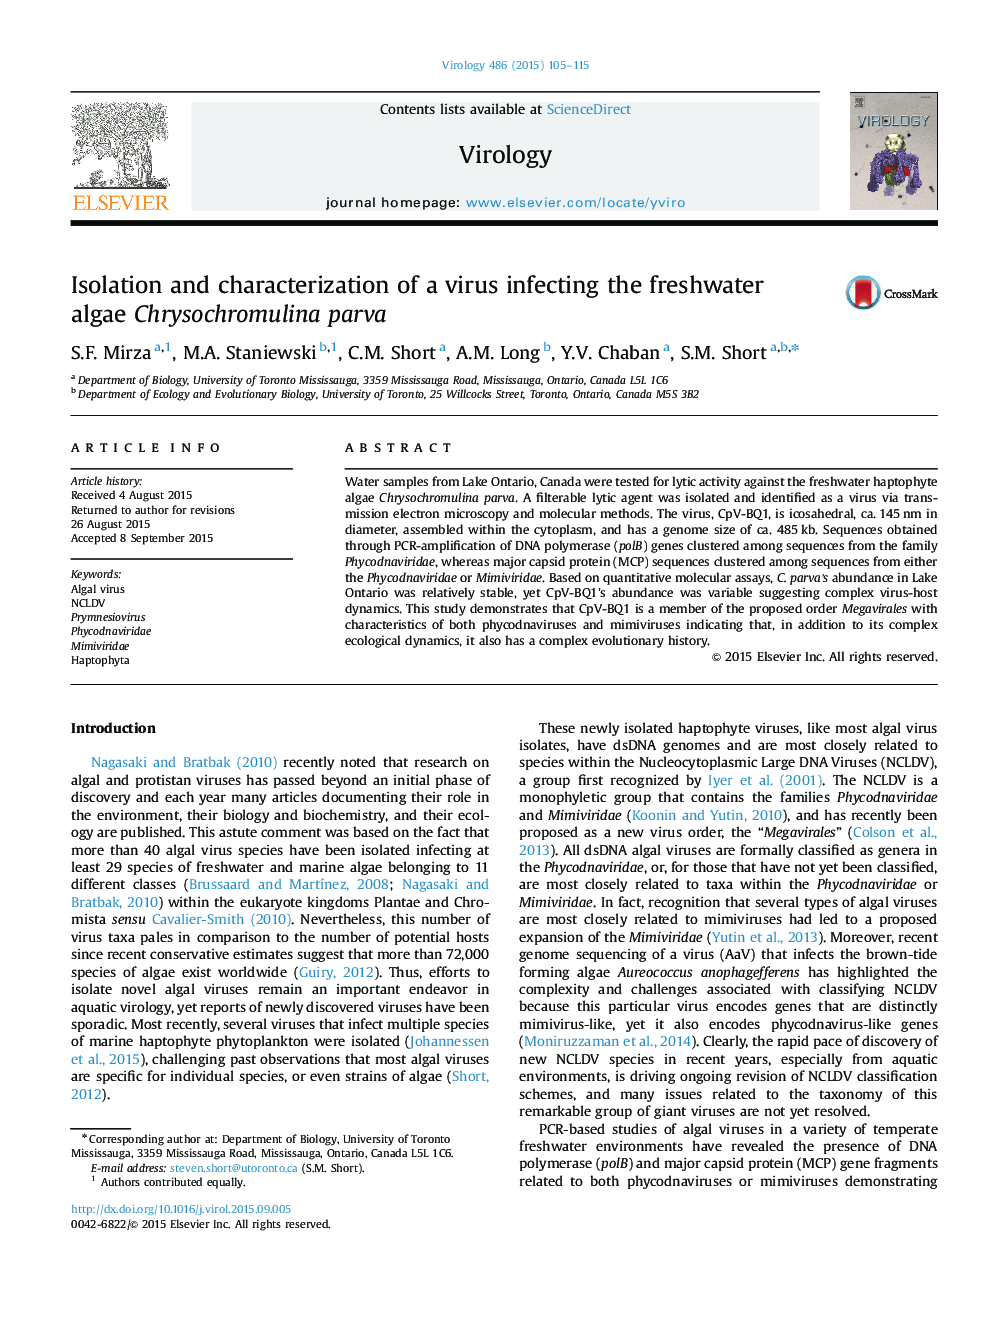 Isolation and characterization of a virus infecting the freshwater algae Chrysochromulina parva